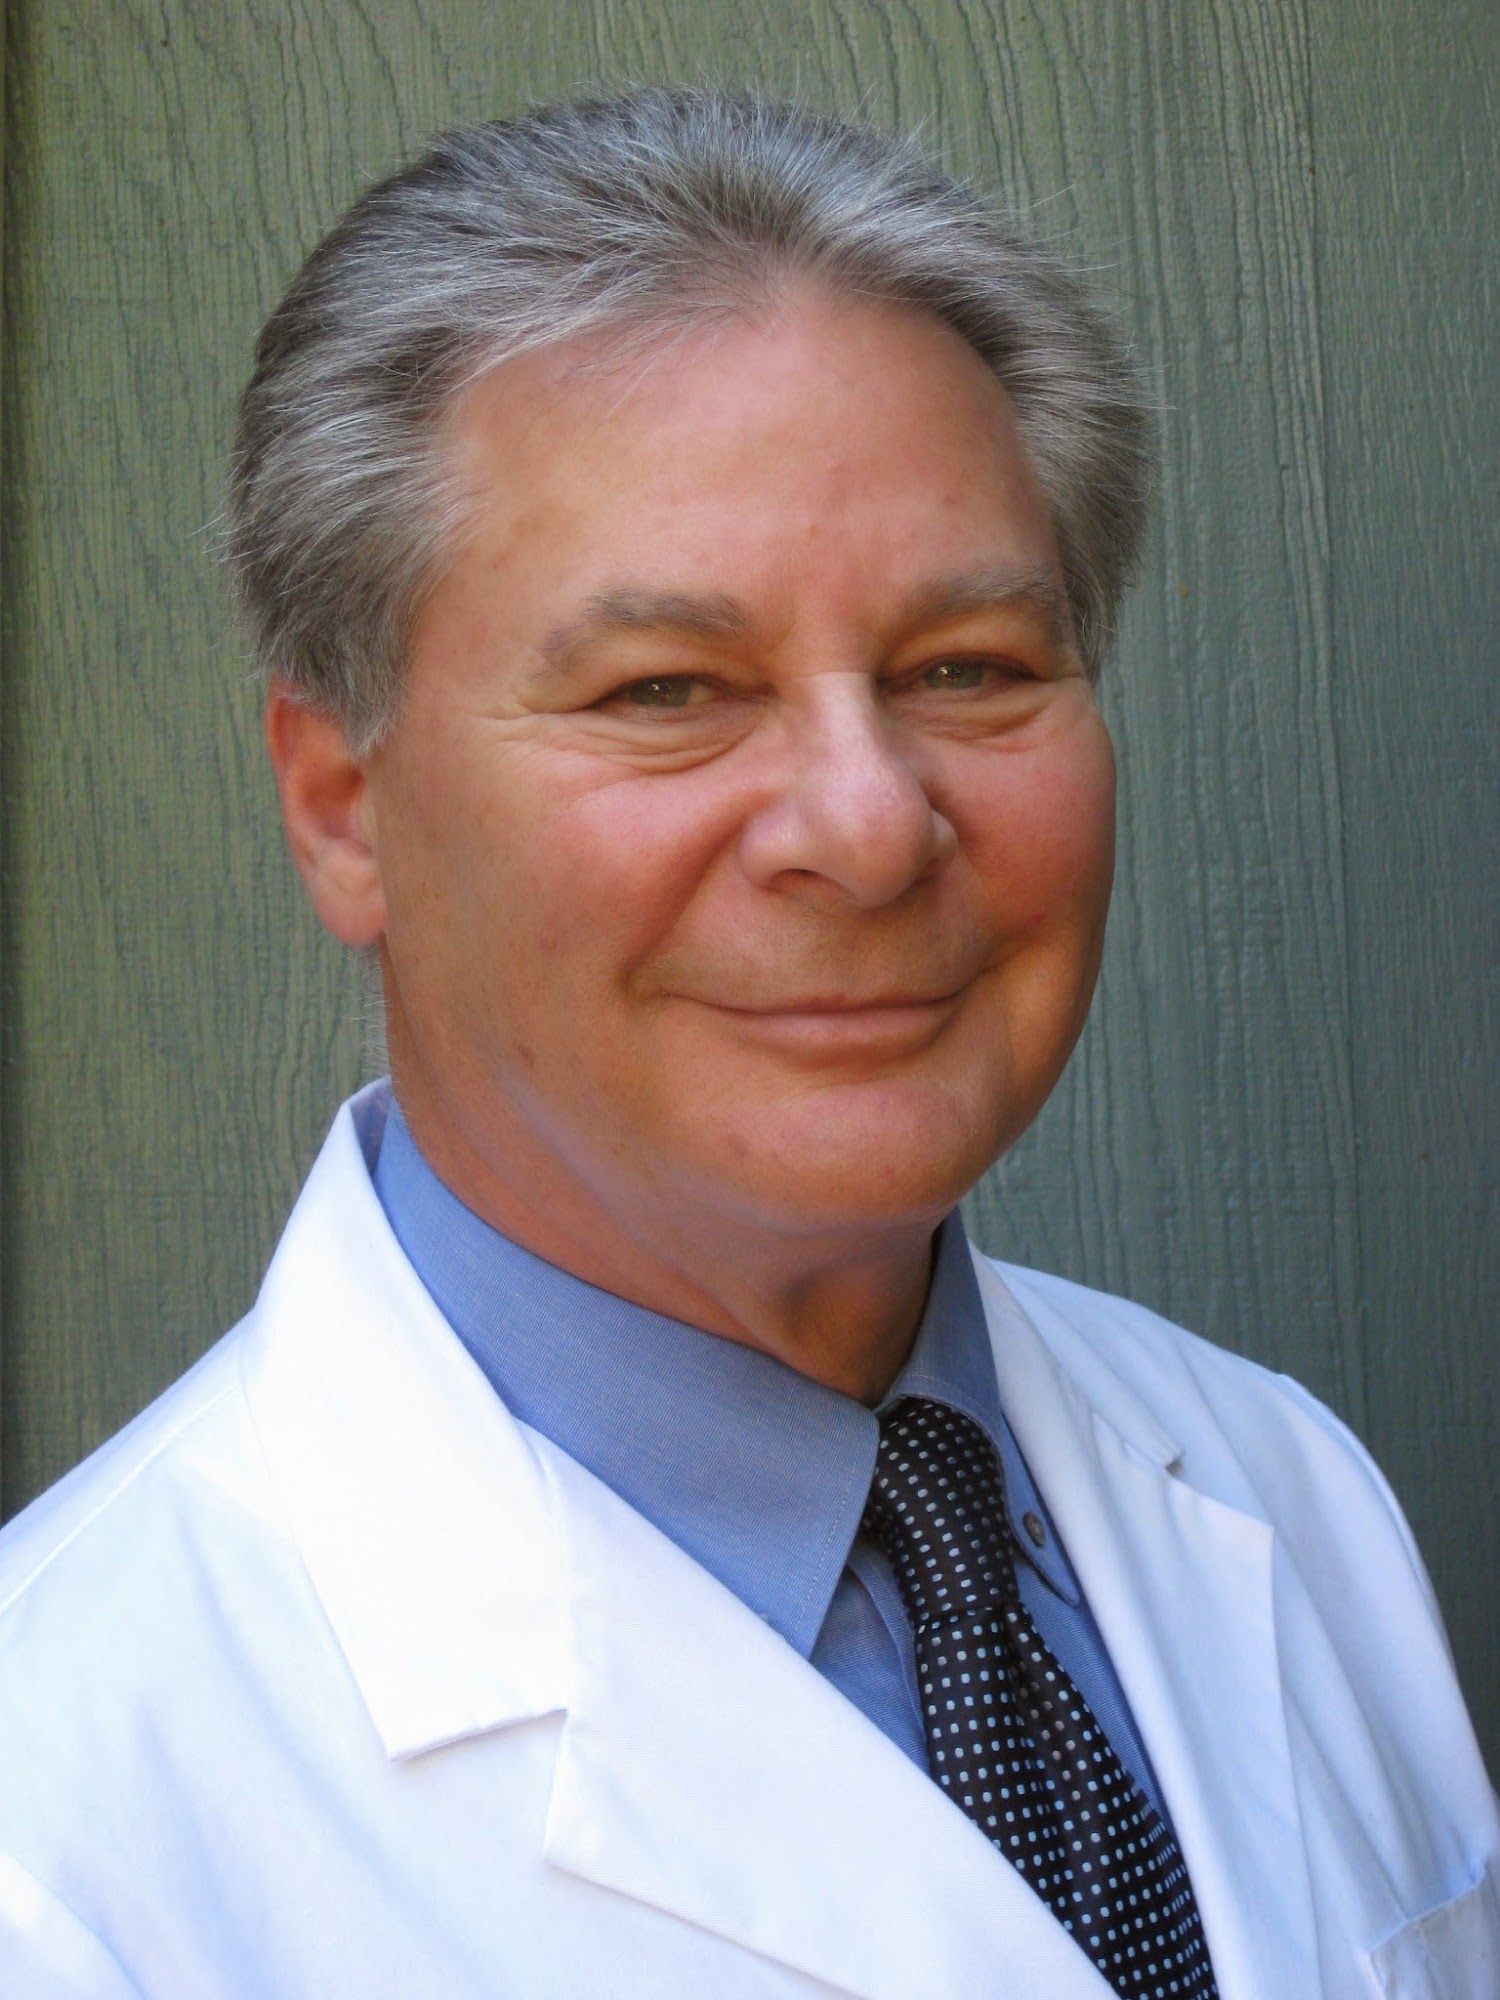 Martin L. Rossman, MD: Marin Integrative Medicine and Medical Acupuncture